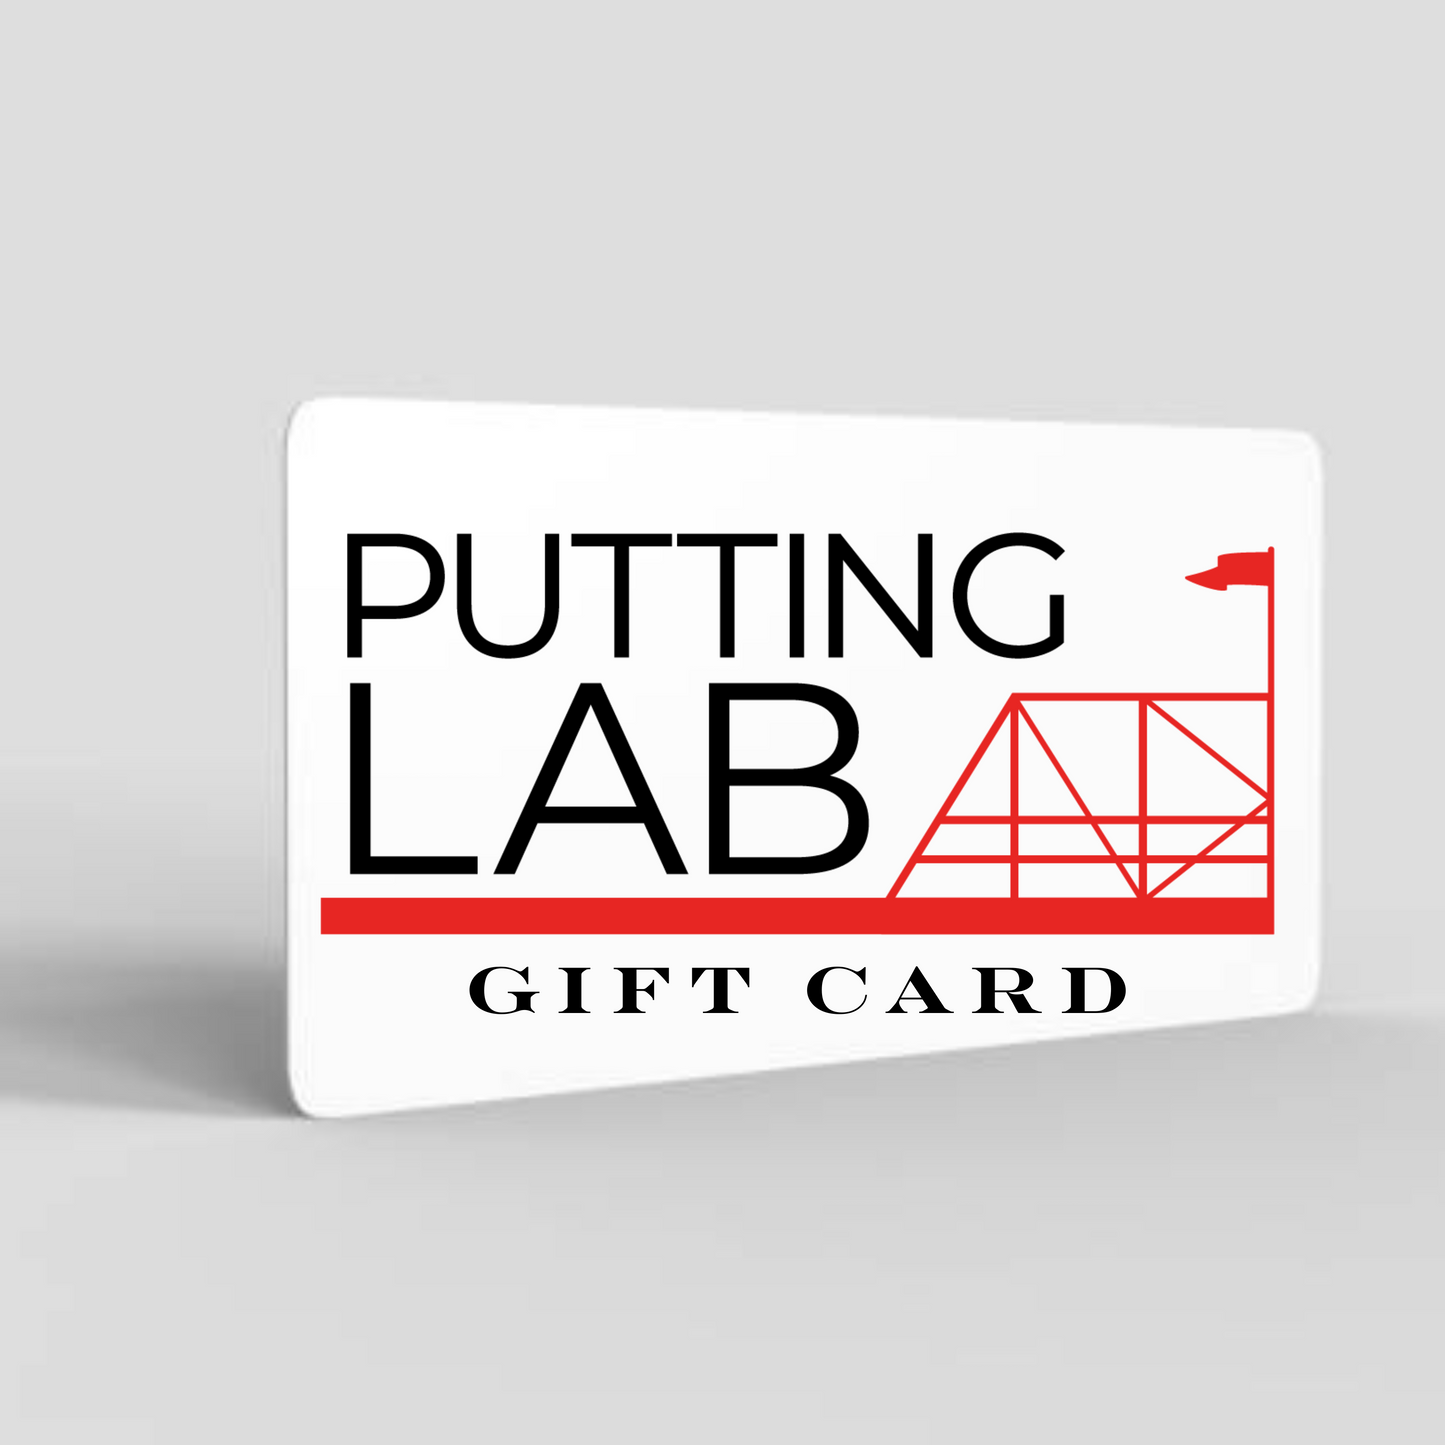 Tour Shop & Putting Lab Gift Card